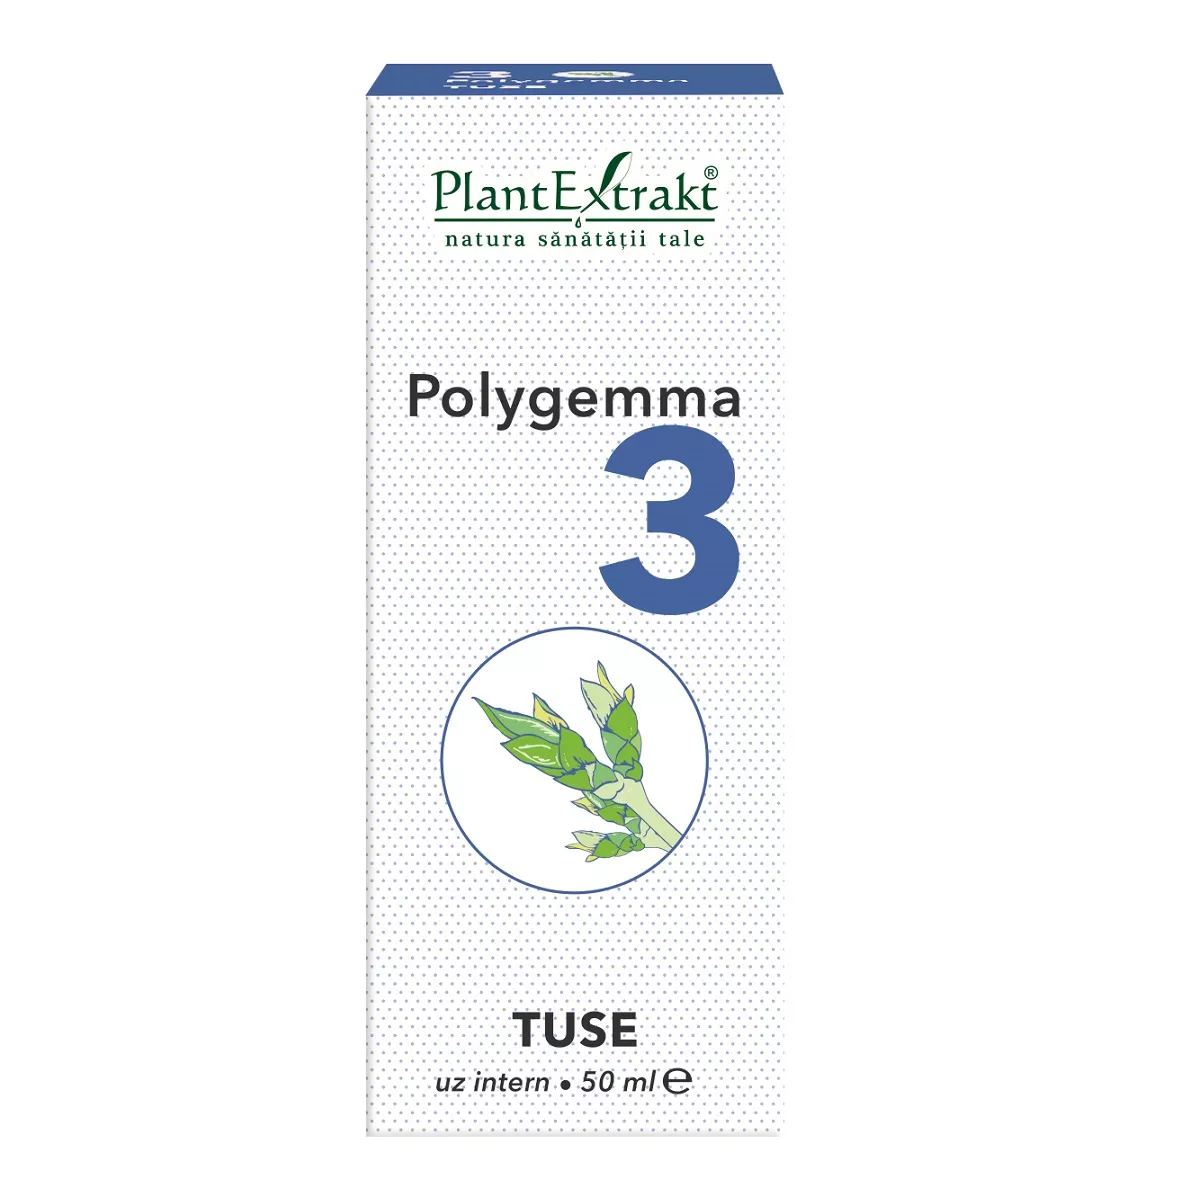 Polygemma 3 Tuse, 50 ml, Plantextrakt, [],remediumfarm.ro